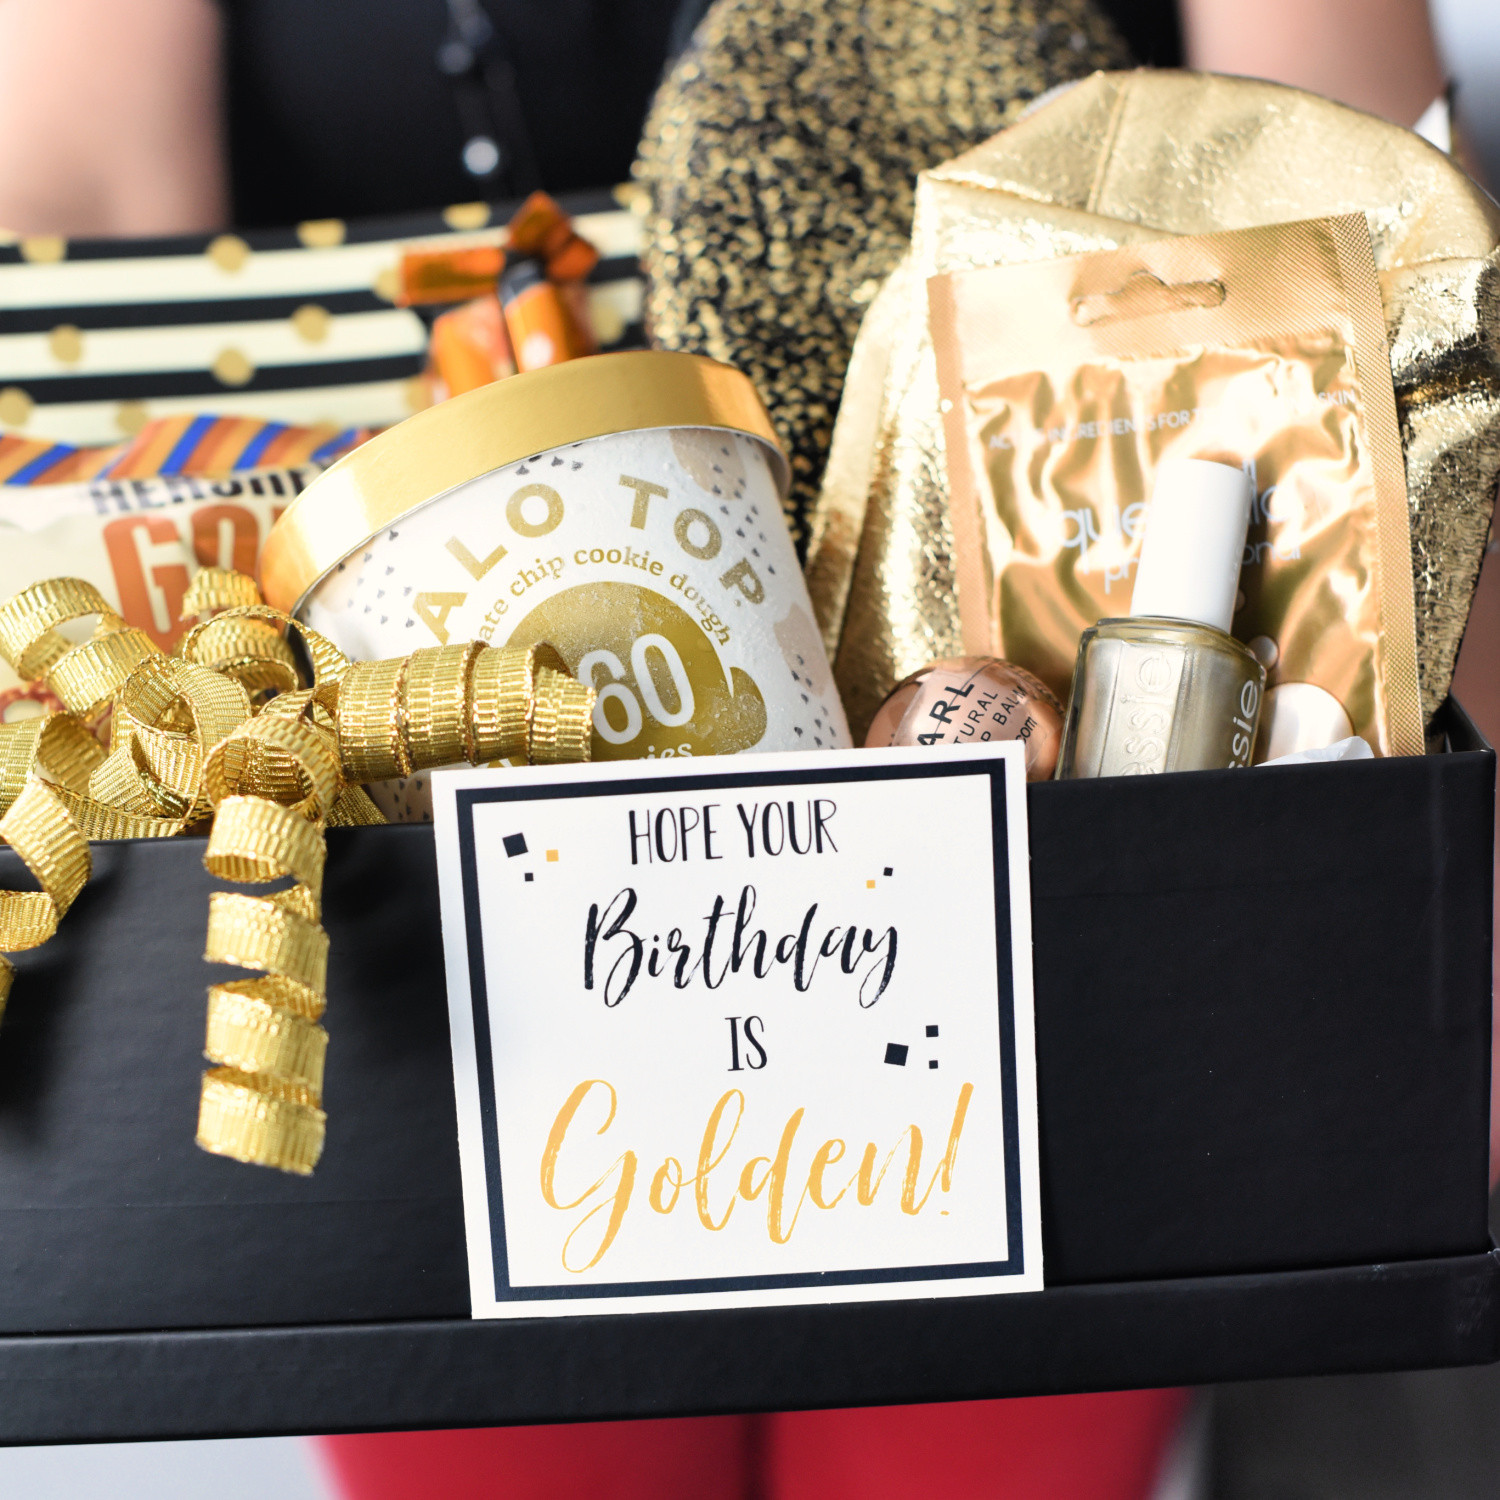 Gift Ideas For Birthday
 Golden Birthday Gift Idea – Fun Squared